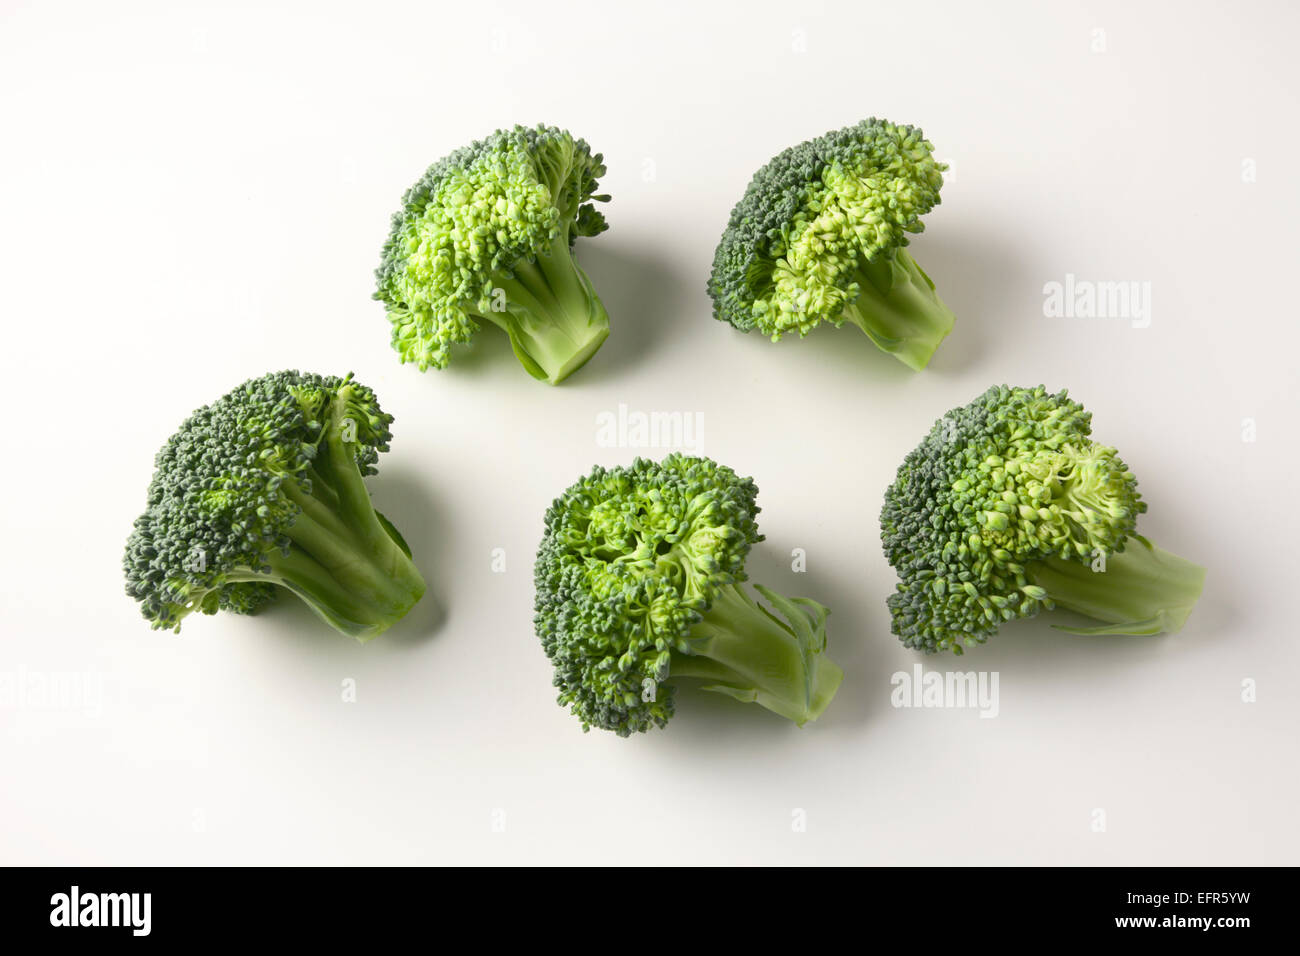 Five Broccoli Florets on a White Background Stock Photo